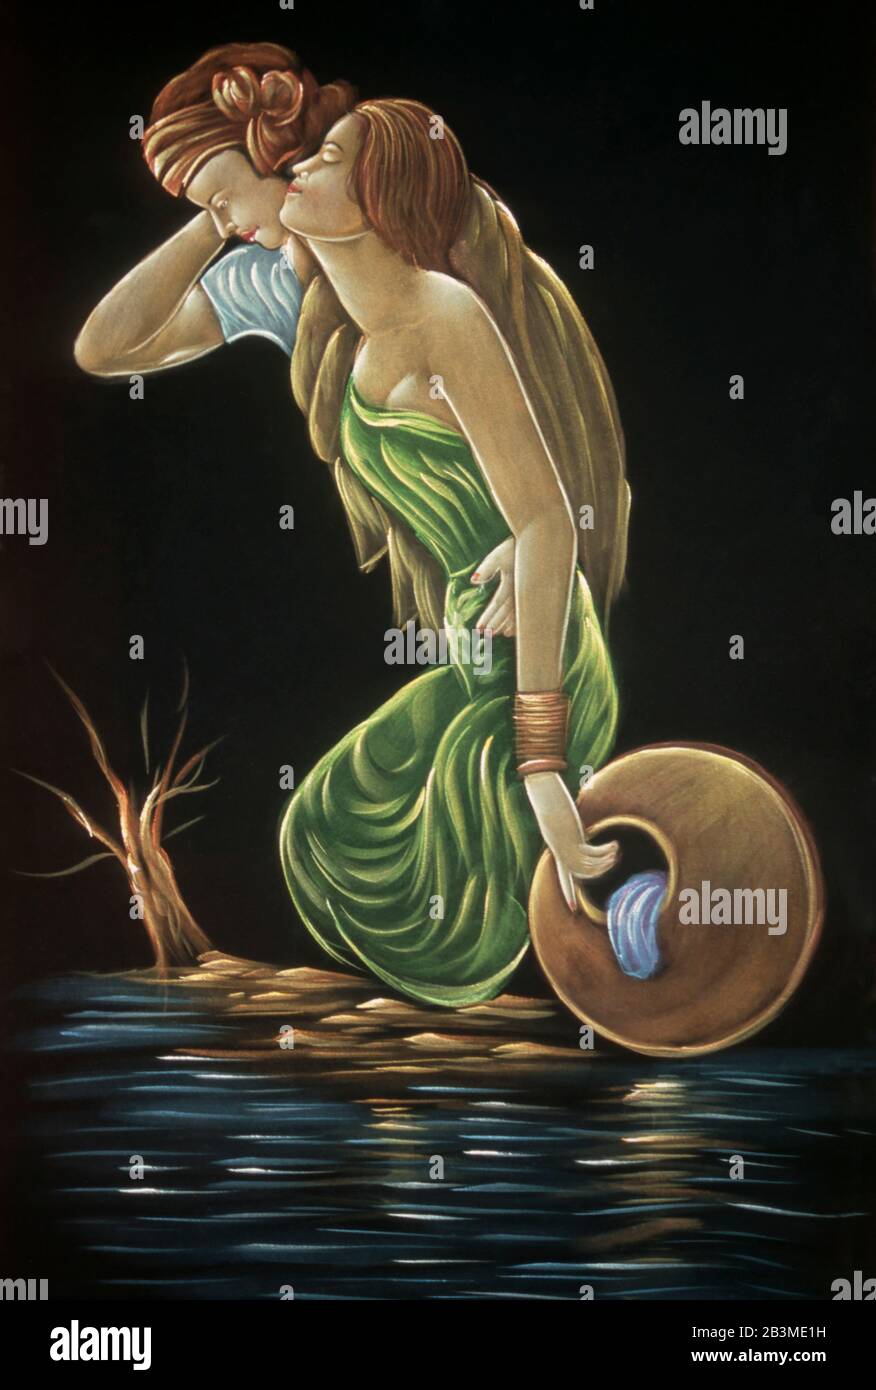 Sohni mahiwal pintura sobre terciopelo, India, Asia Foto de stock